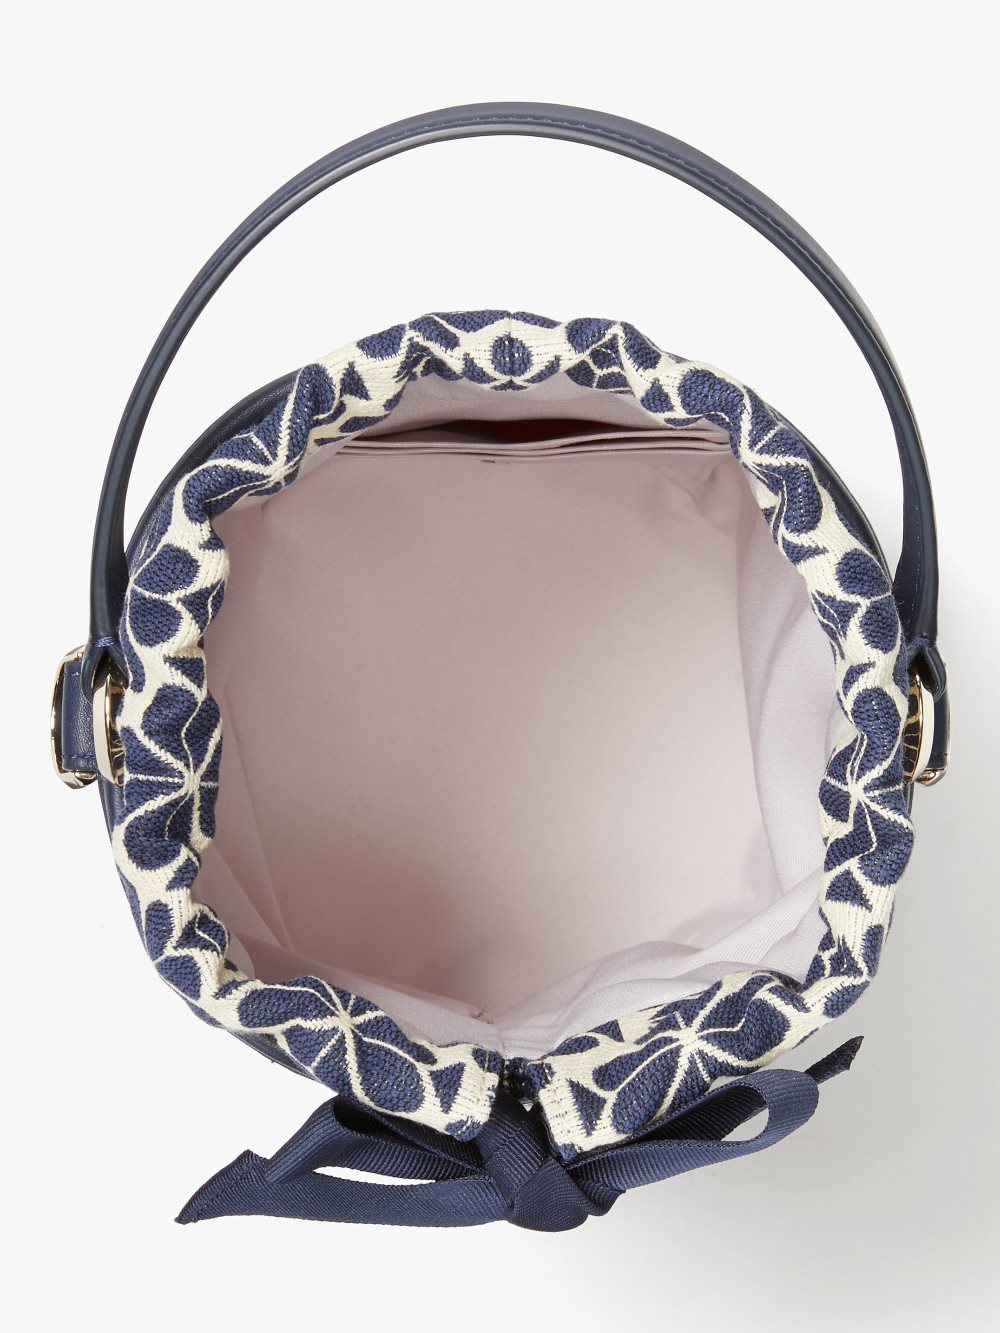 Women's blue multi spade flower jacquard picnic small bucket bag | Kate Spade